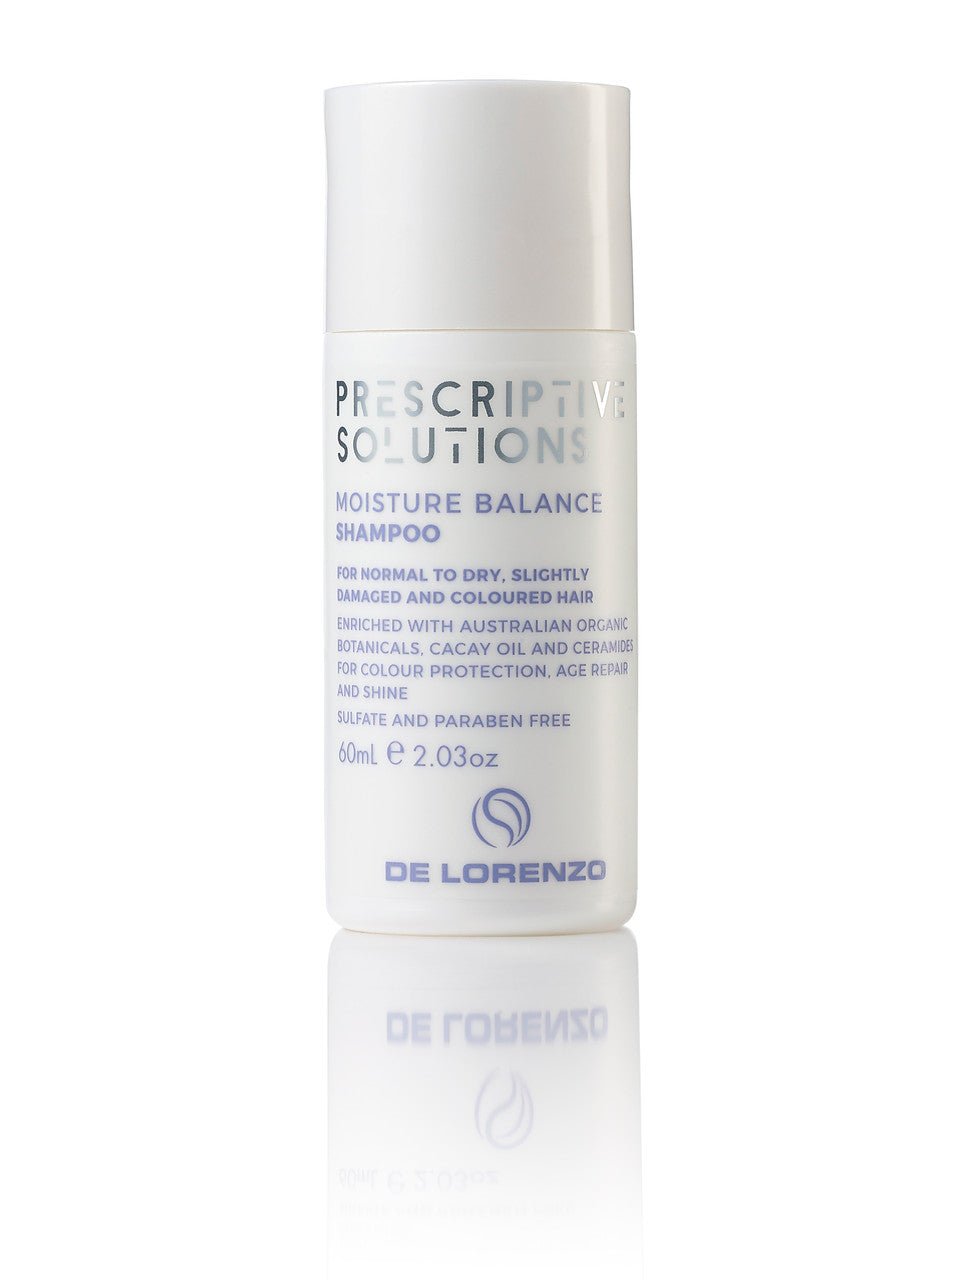 De Lorenzo Prescriptive Solutions Moisture Balance Shampoo 60mls - HairBeautyInk